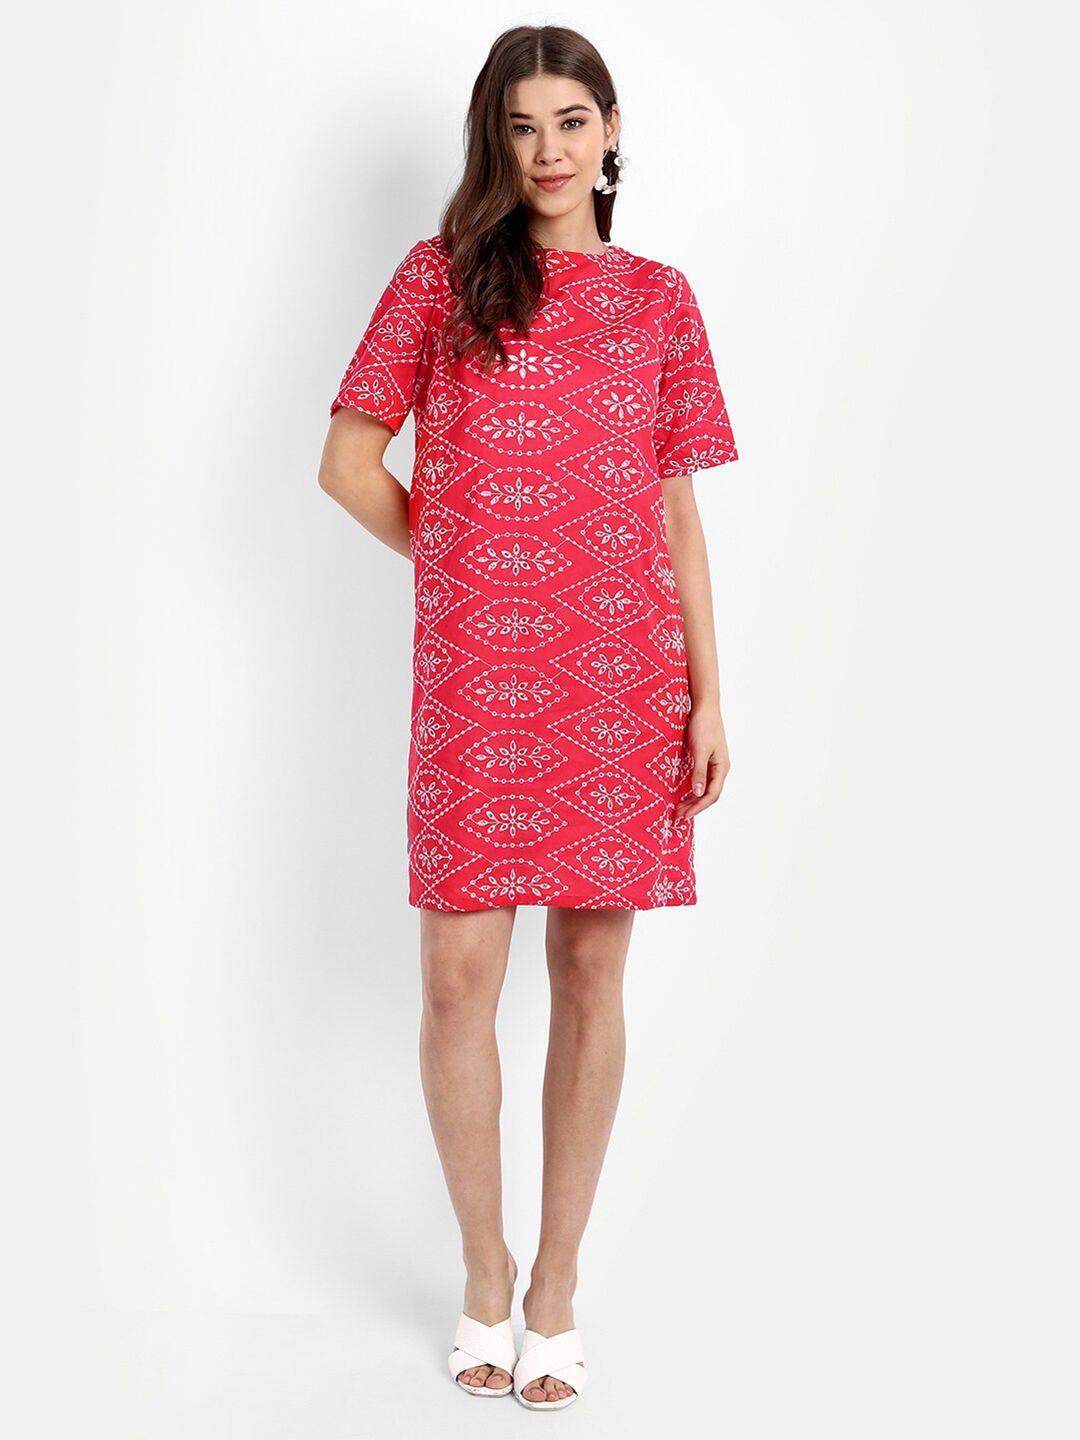 rediscover fashion red cotton schiffli dress